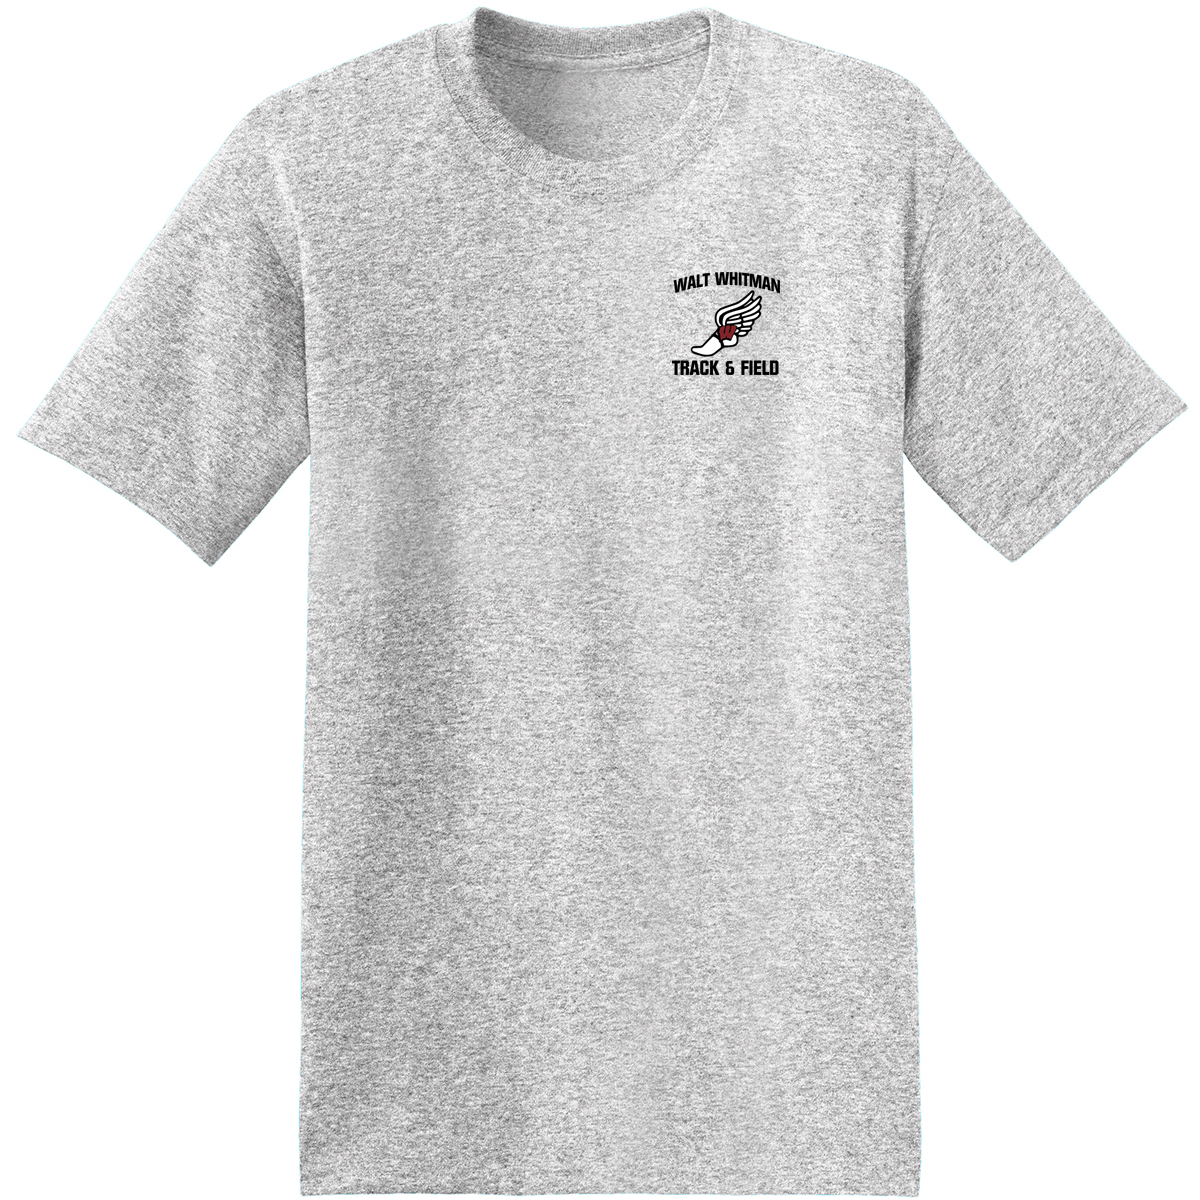 Whitman Track & Field T-Shirt